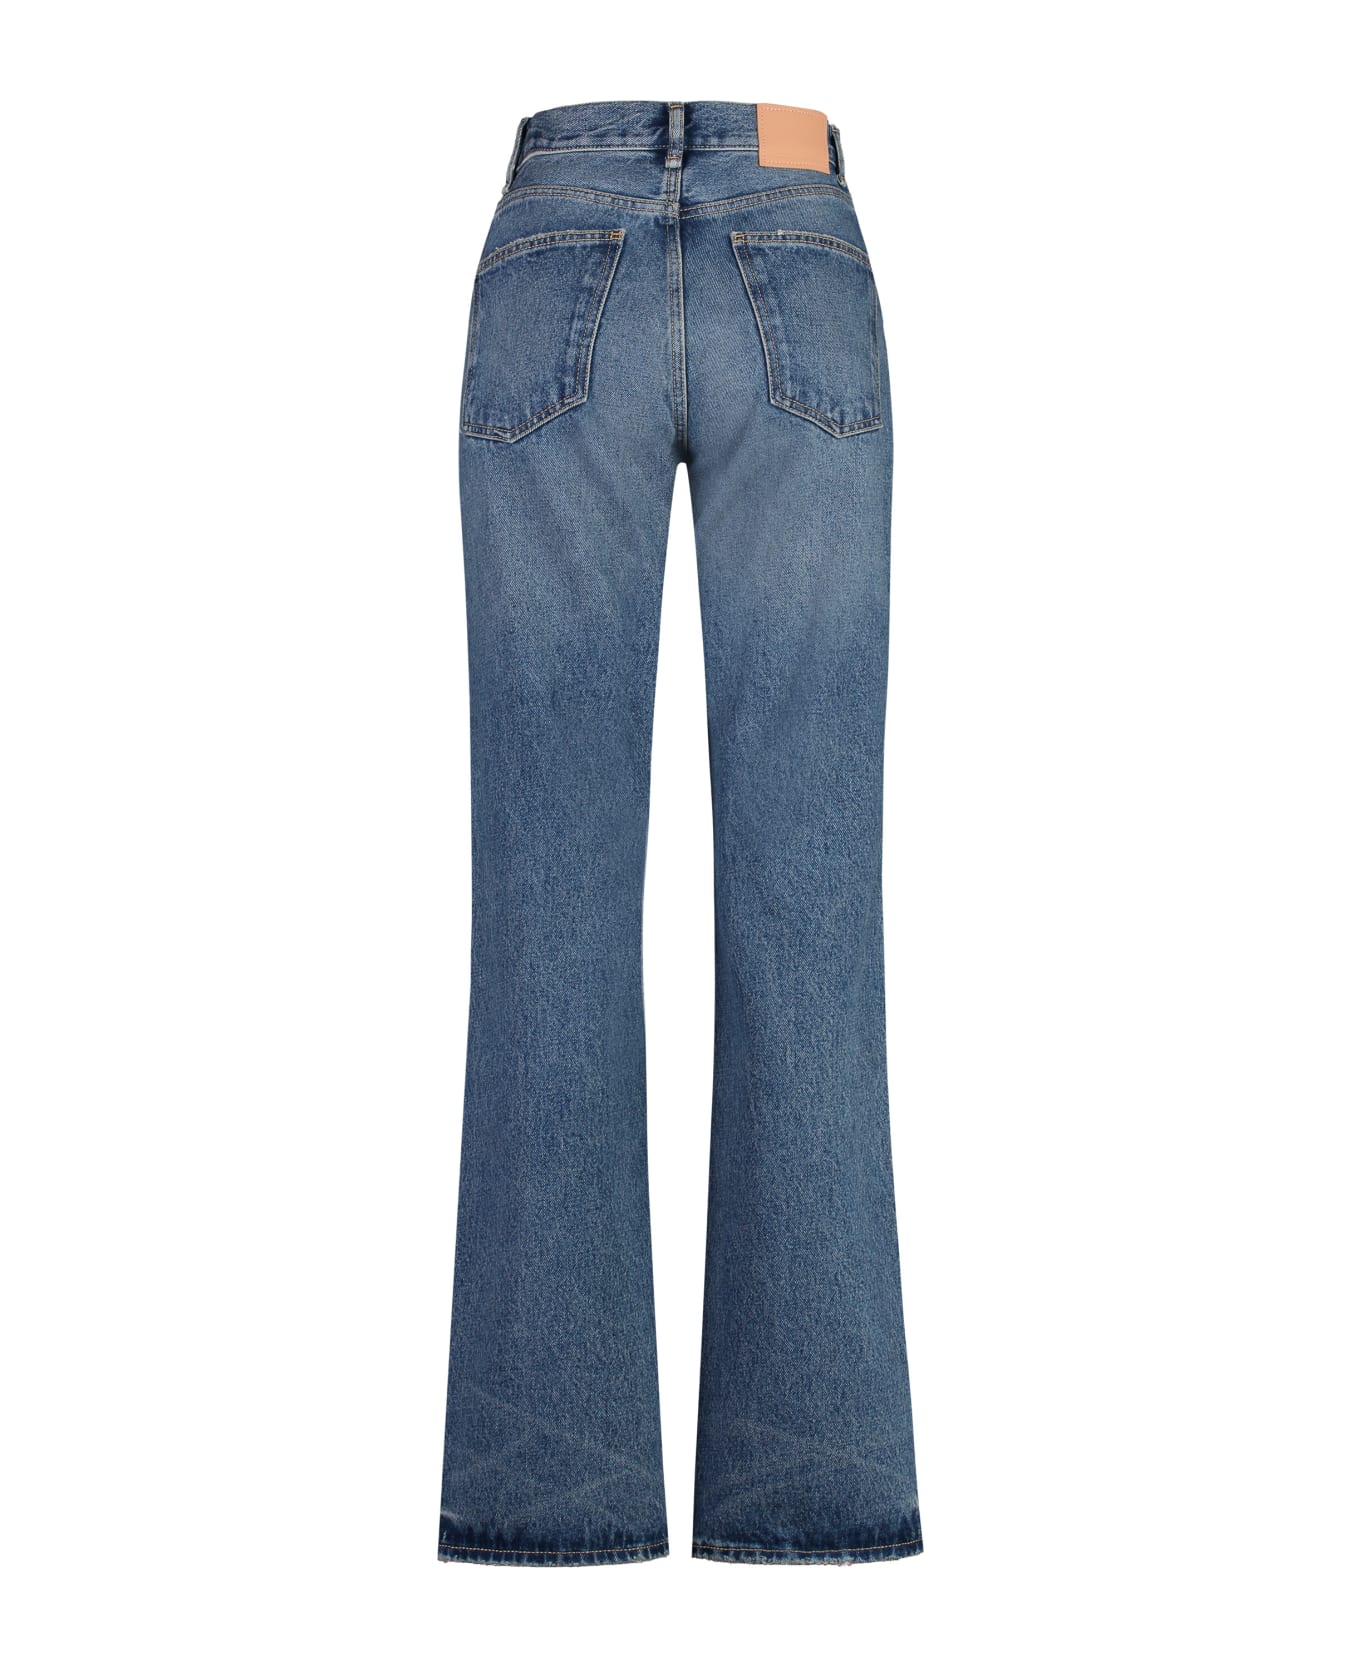 Acne Studios 1977 Regular Fit Jeans - Denim